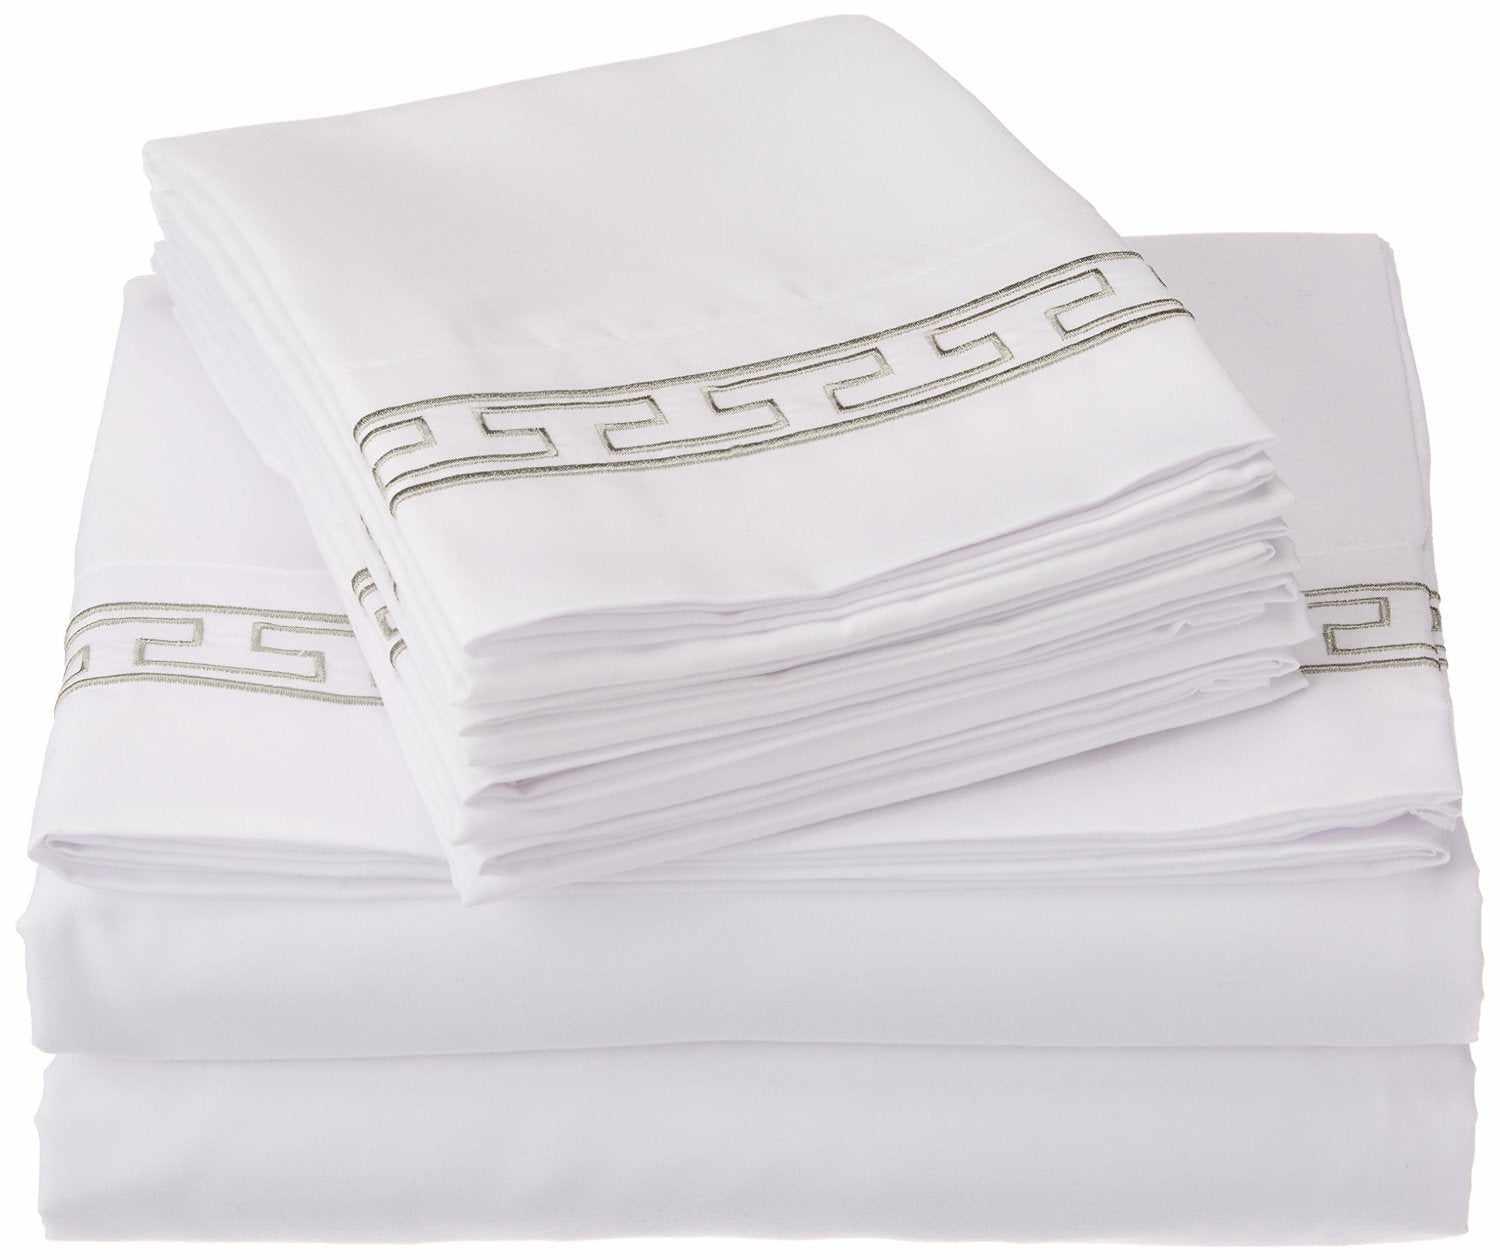 Superior 3000 Series Wrinkle Resistant Elegant Embroidered 6 Piece Sheet Set - White/Grey